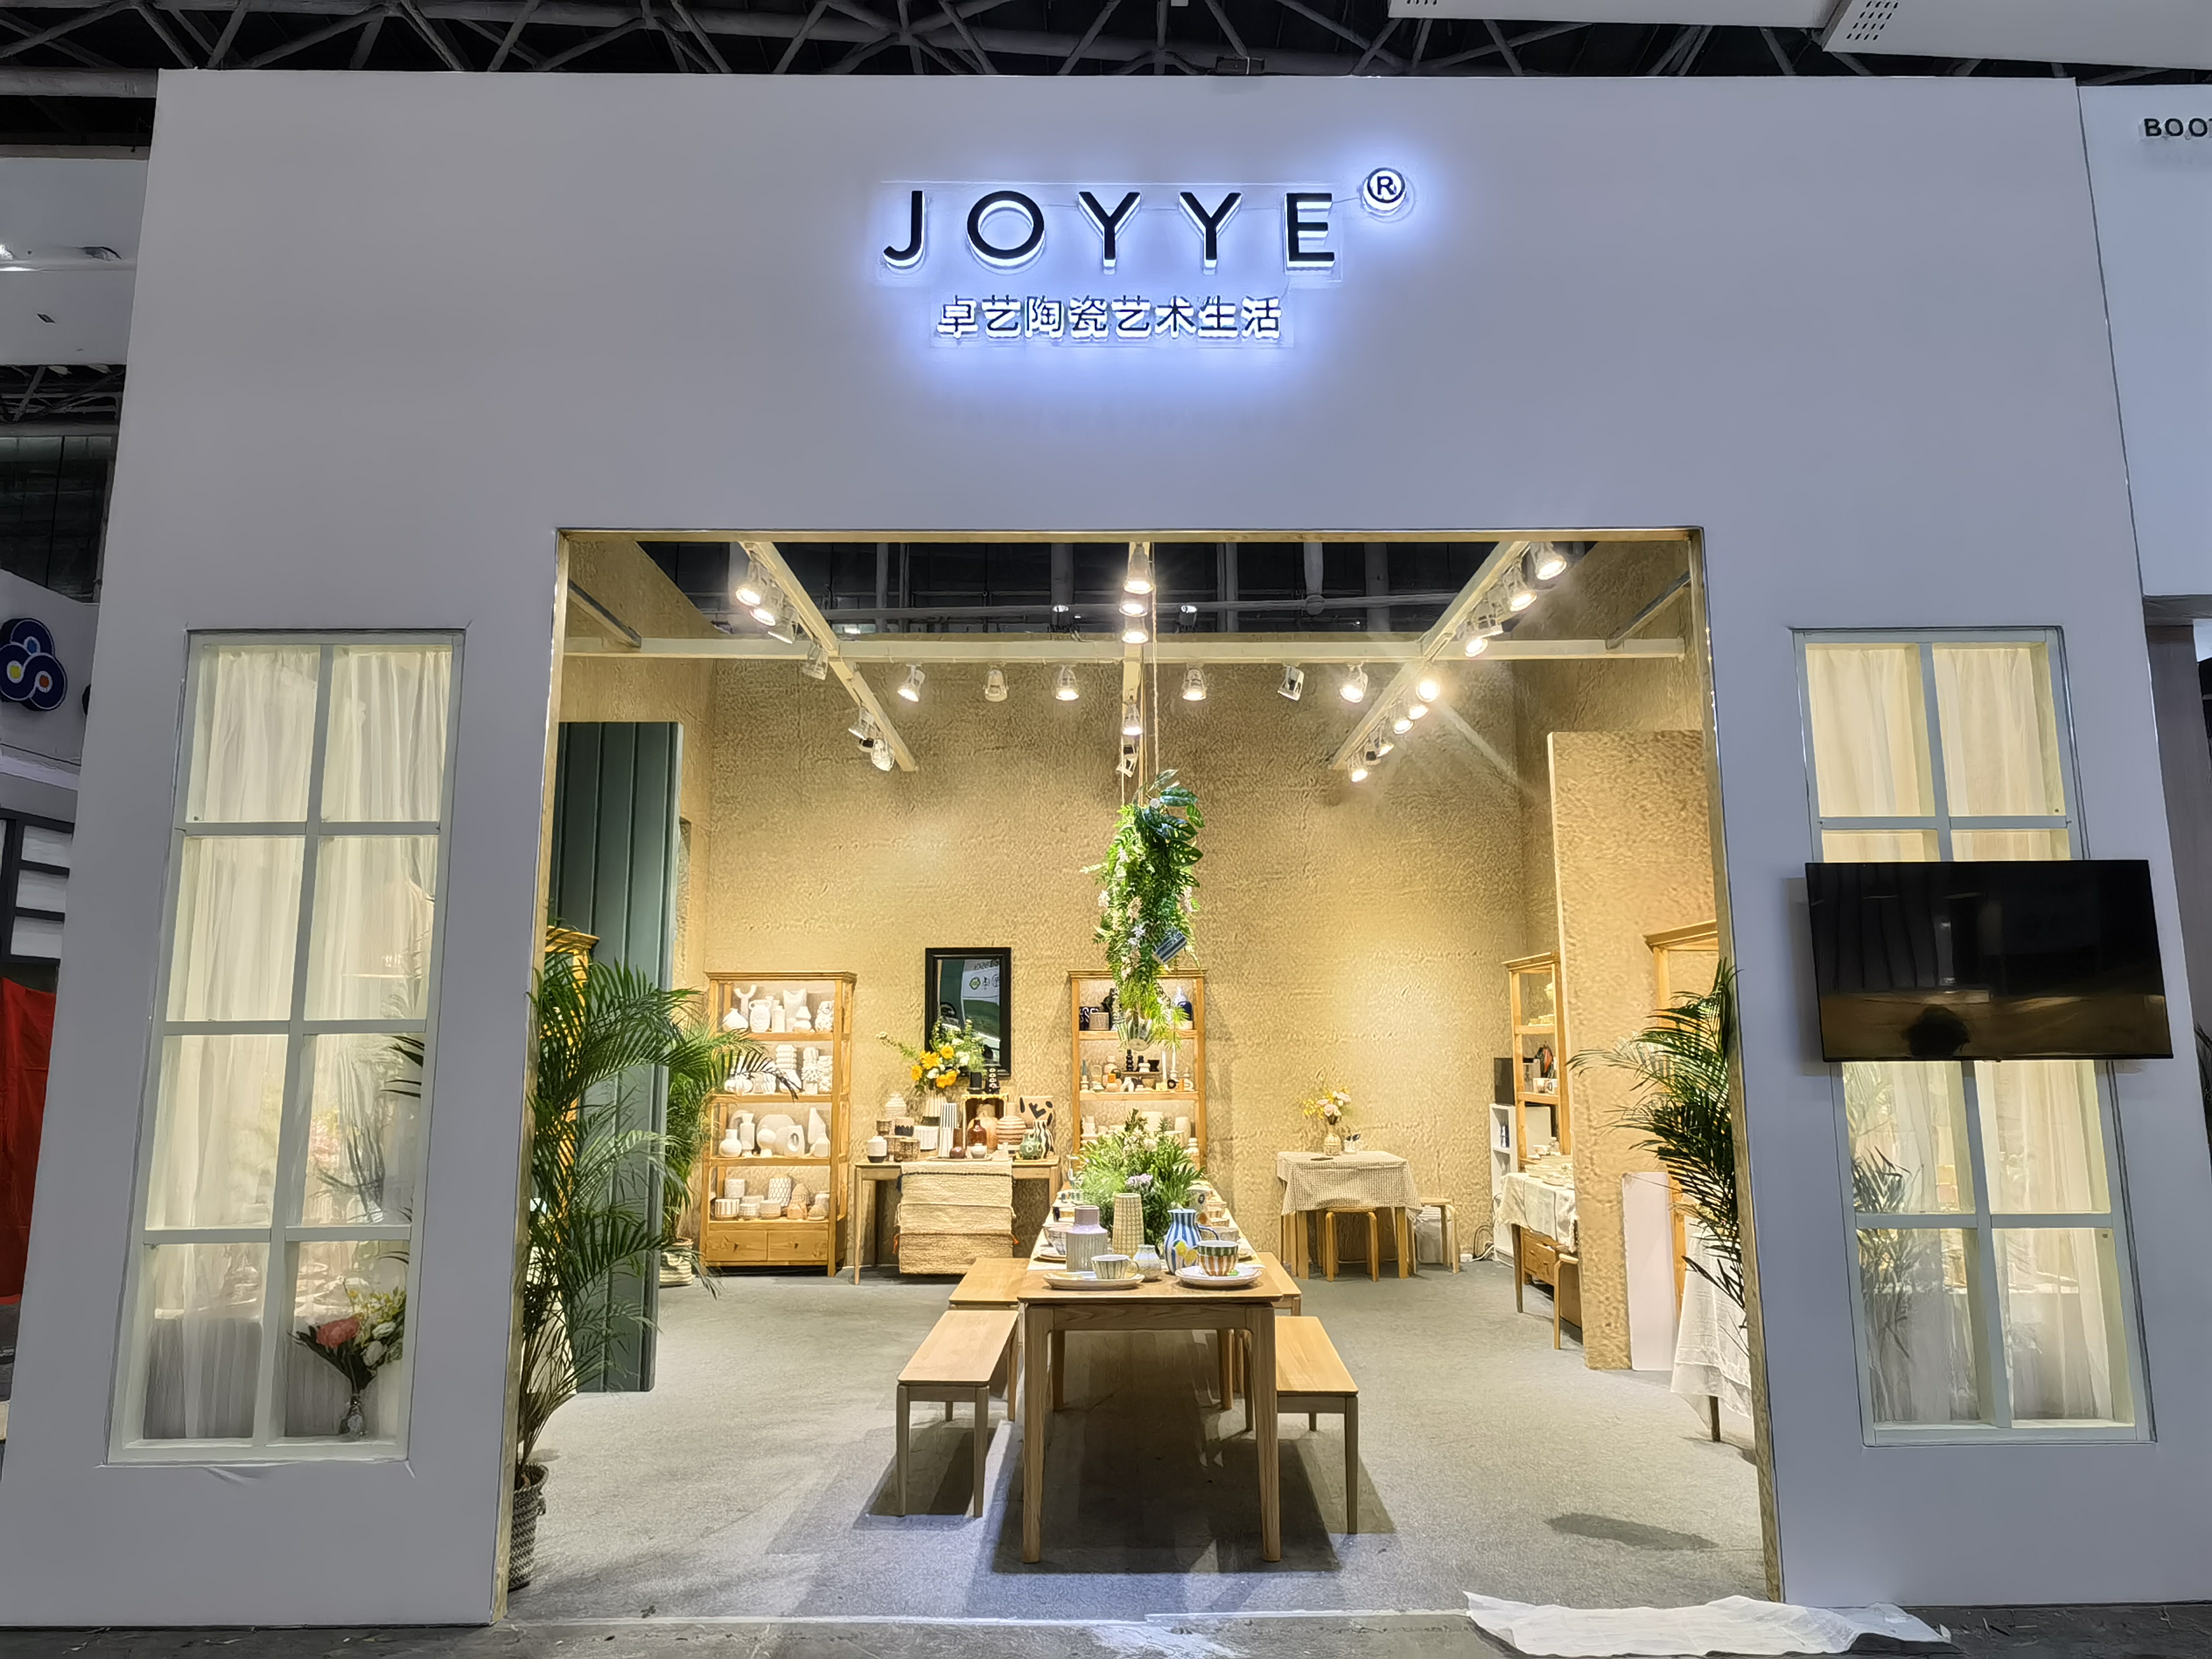 Joyye Trade Show Display